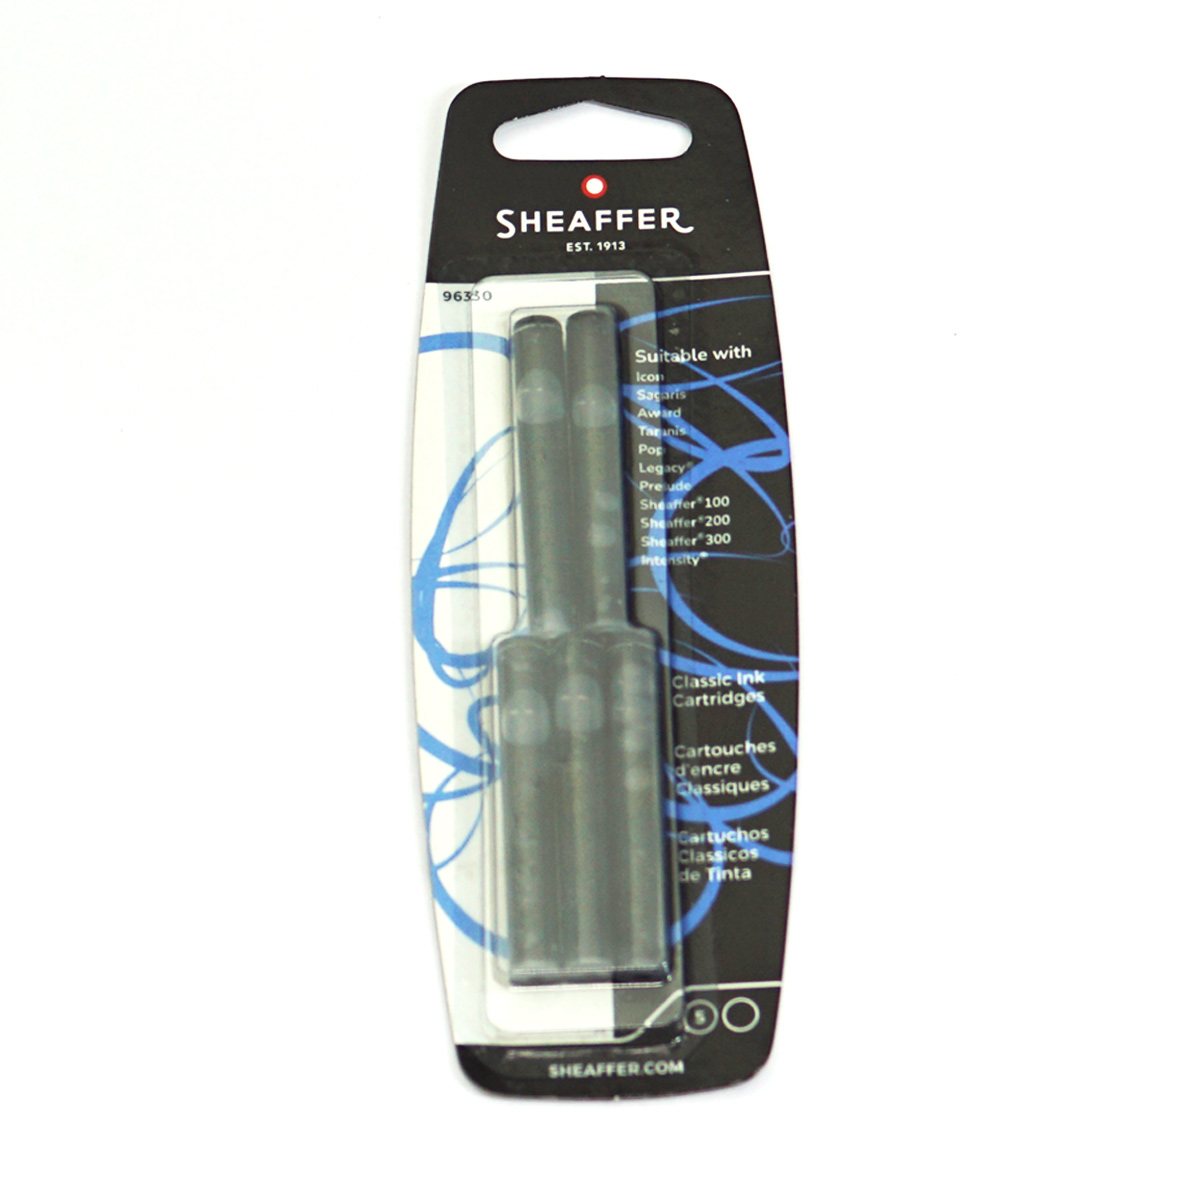 Sheaffer Model: 70517 96330 A set of 5 Black ink cartridge